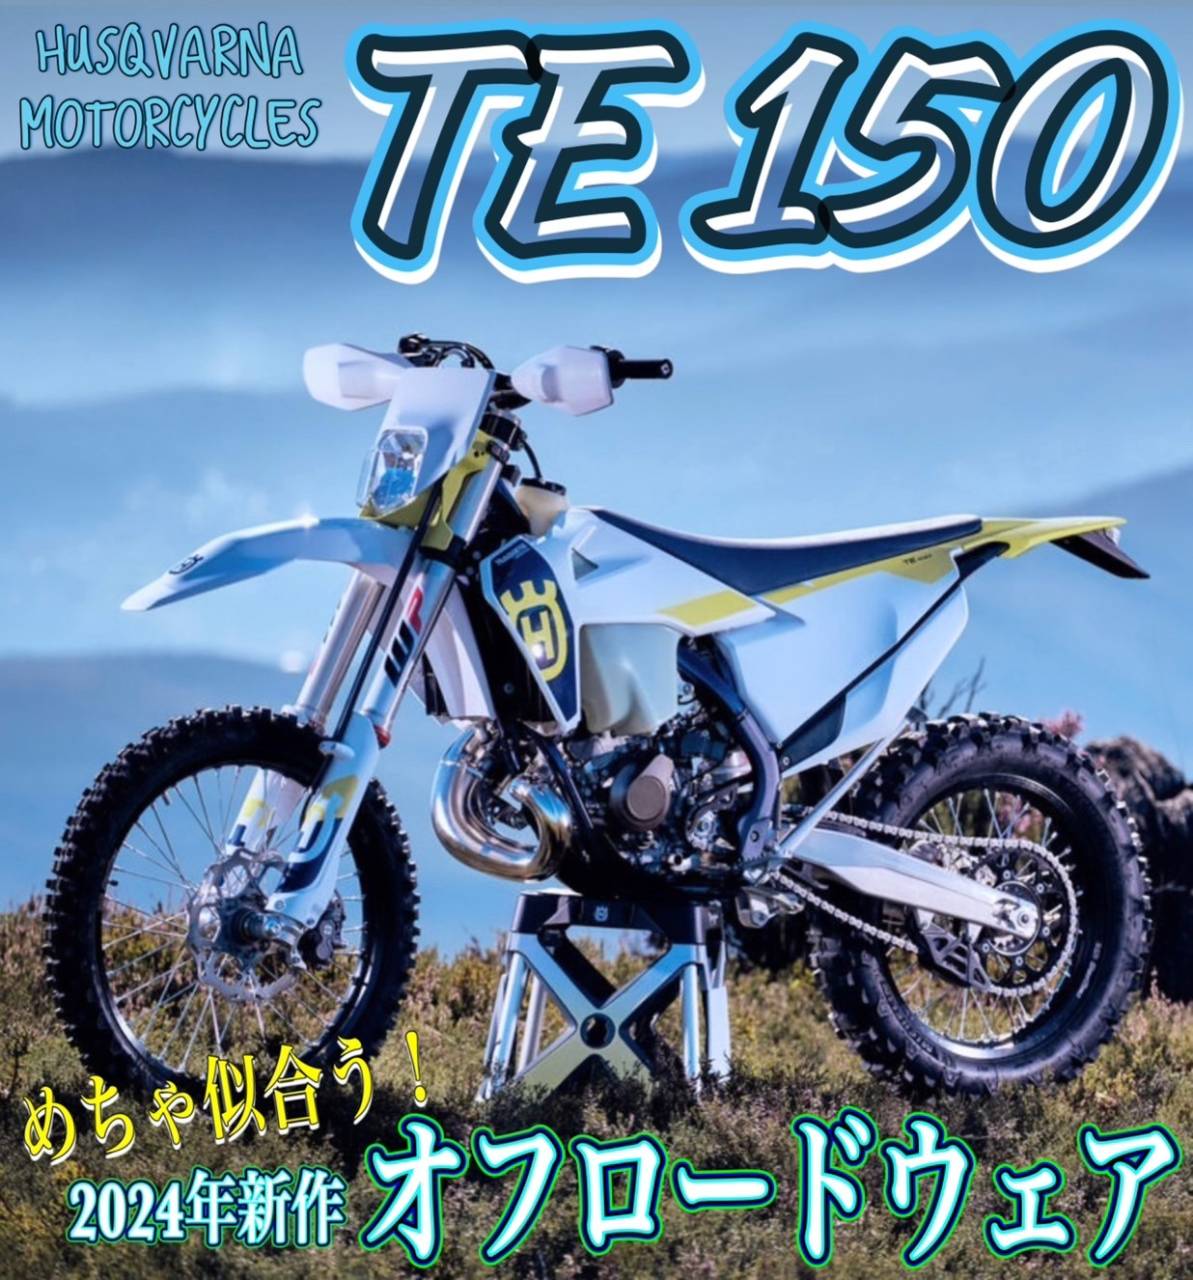 💙Husqvarna Motorcyclesの【TE 150】 には、